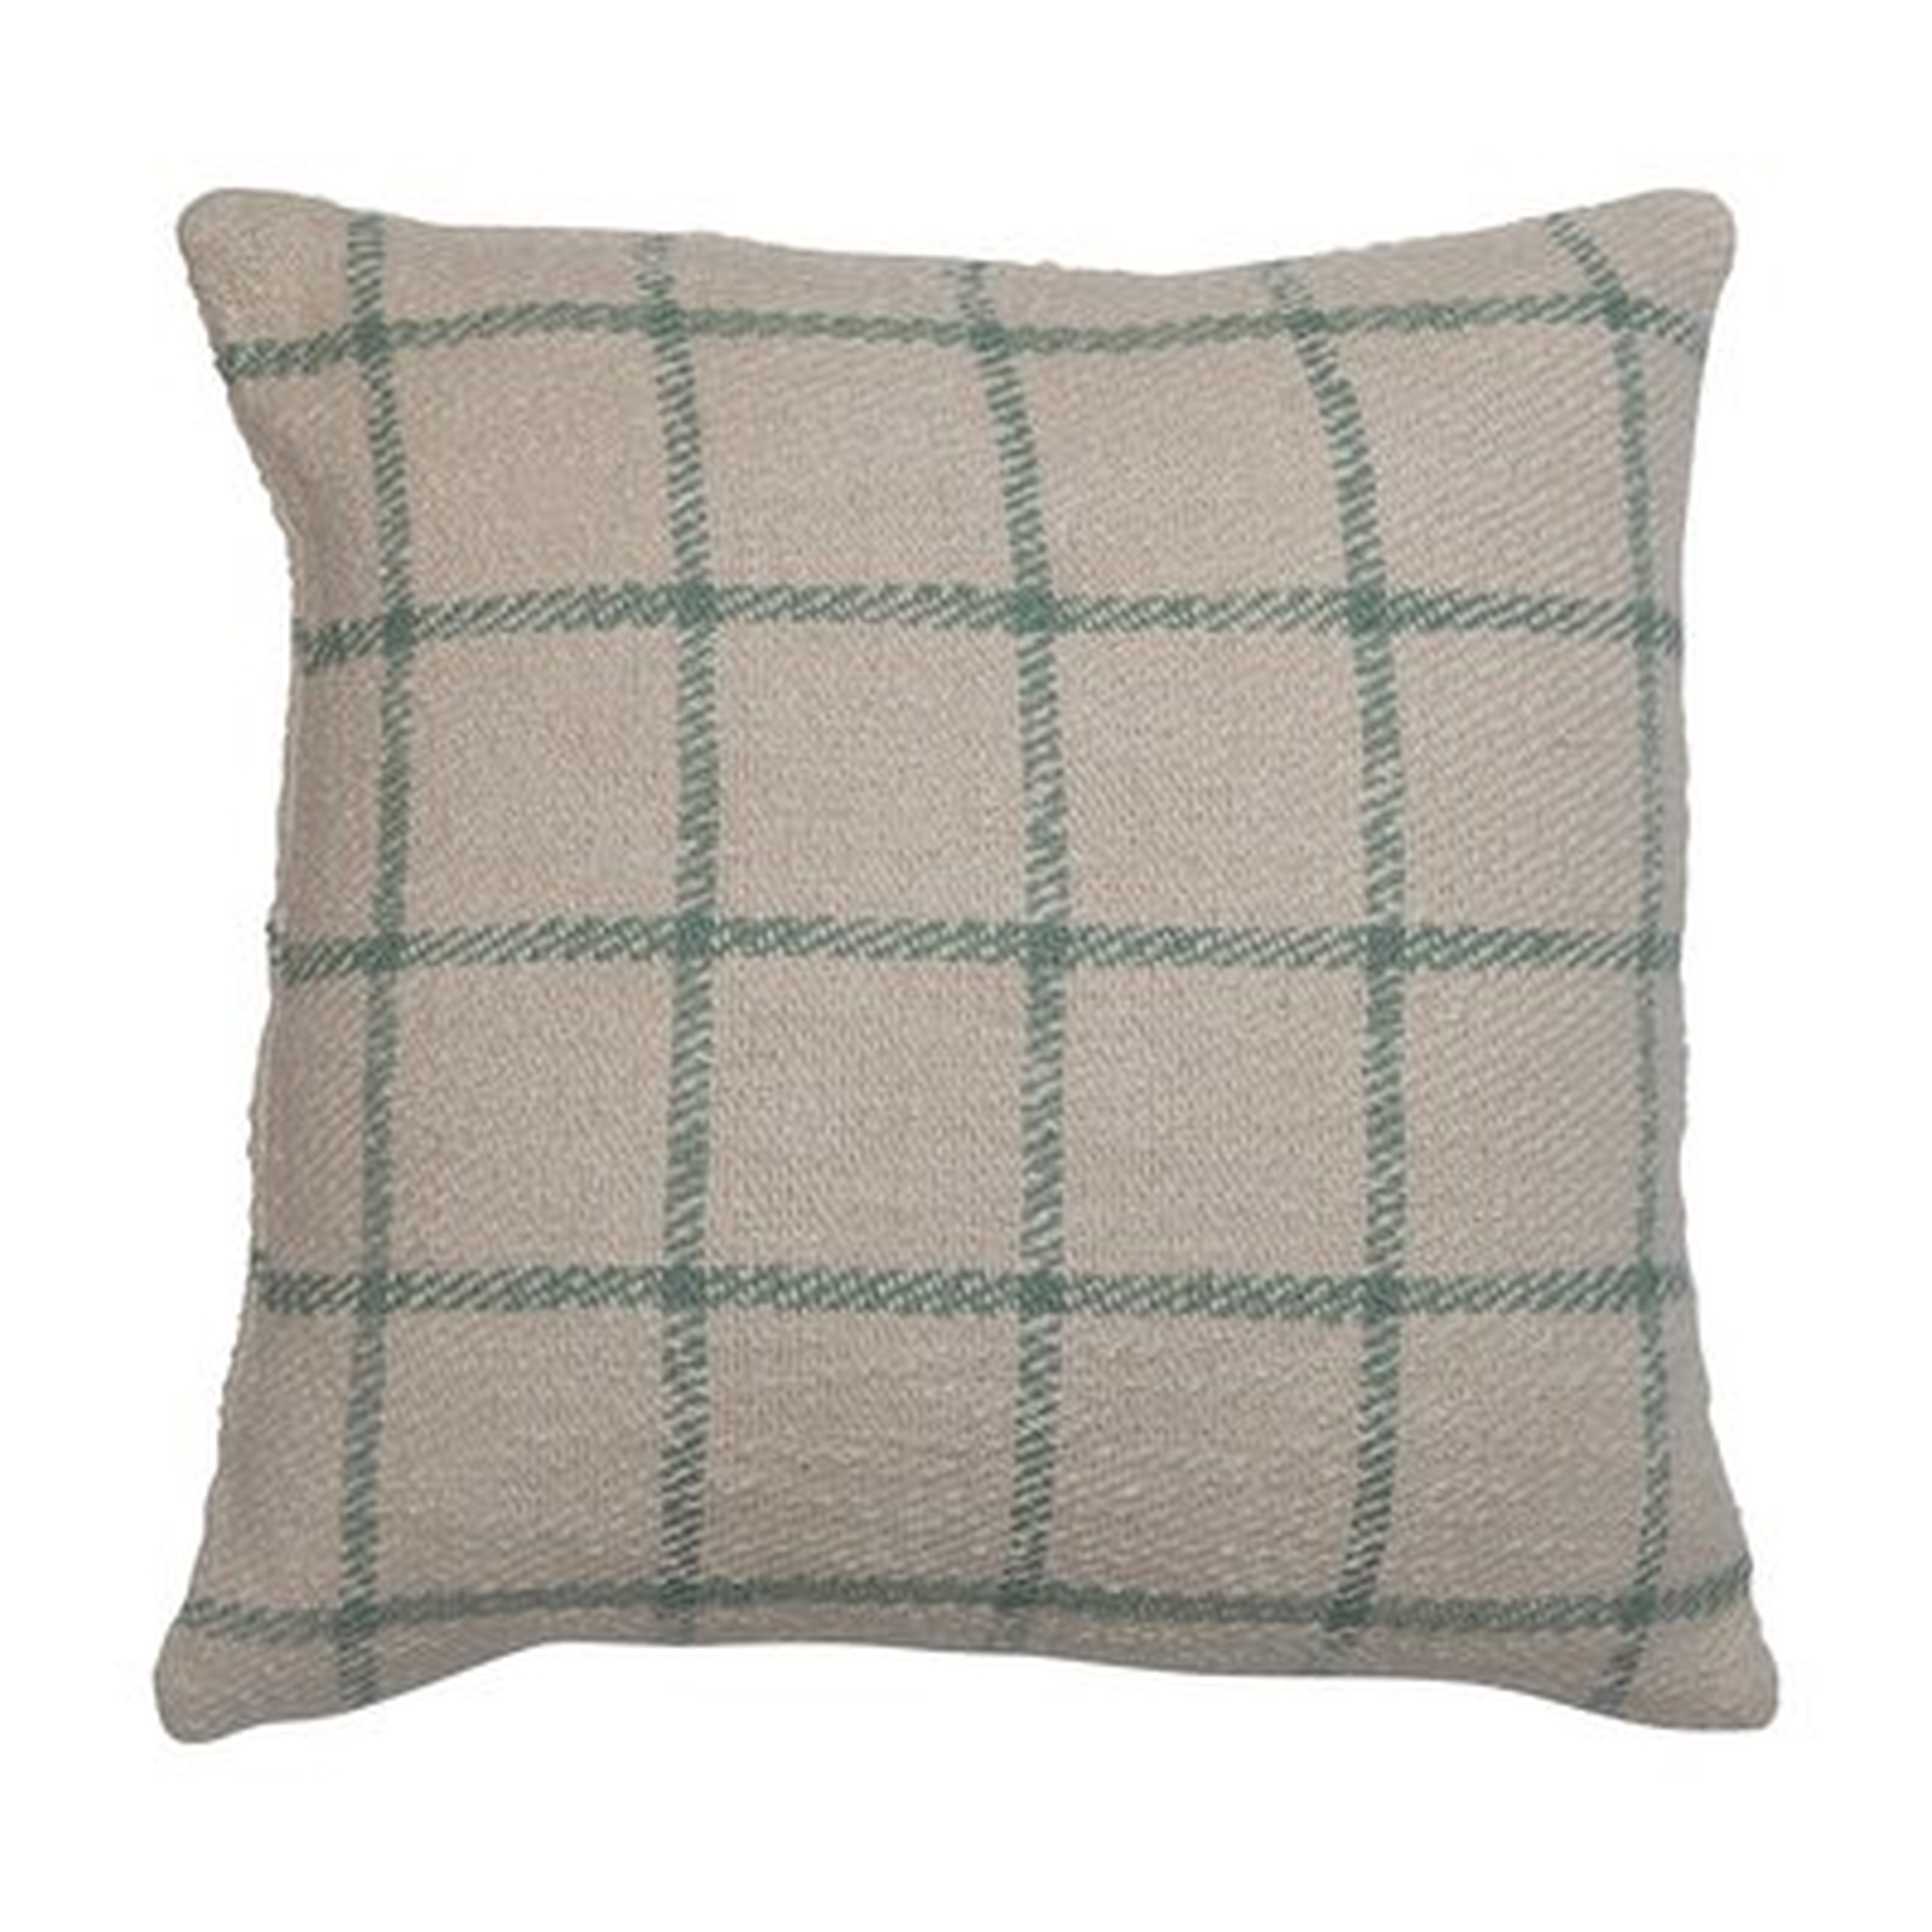 20" Square Woven Cotton Plaid Pillow, Green Plaid On Cream Colored Pillow - Wayfair